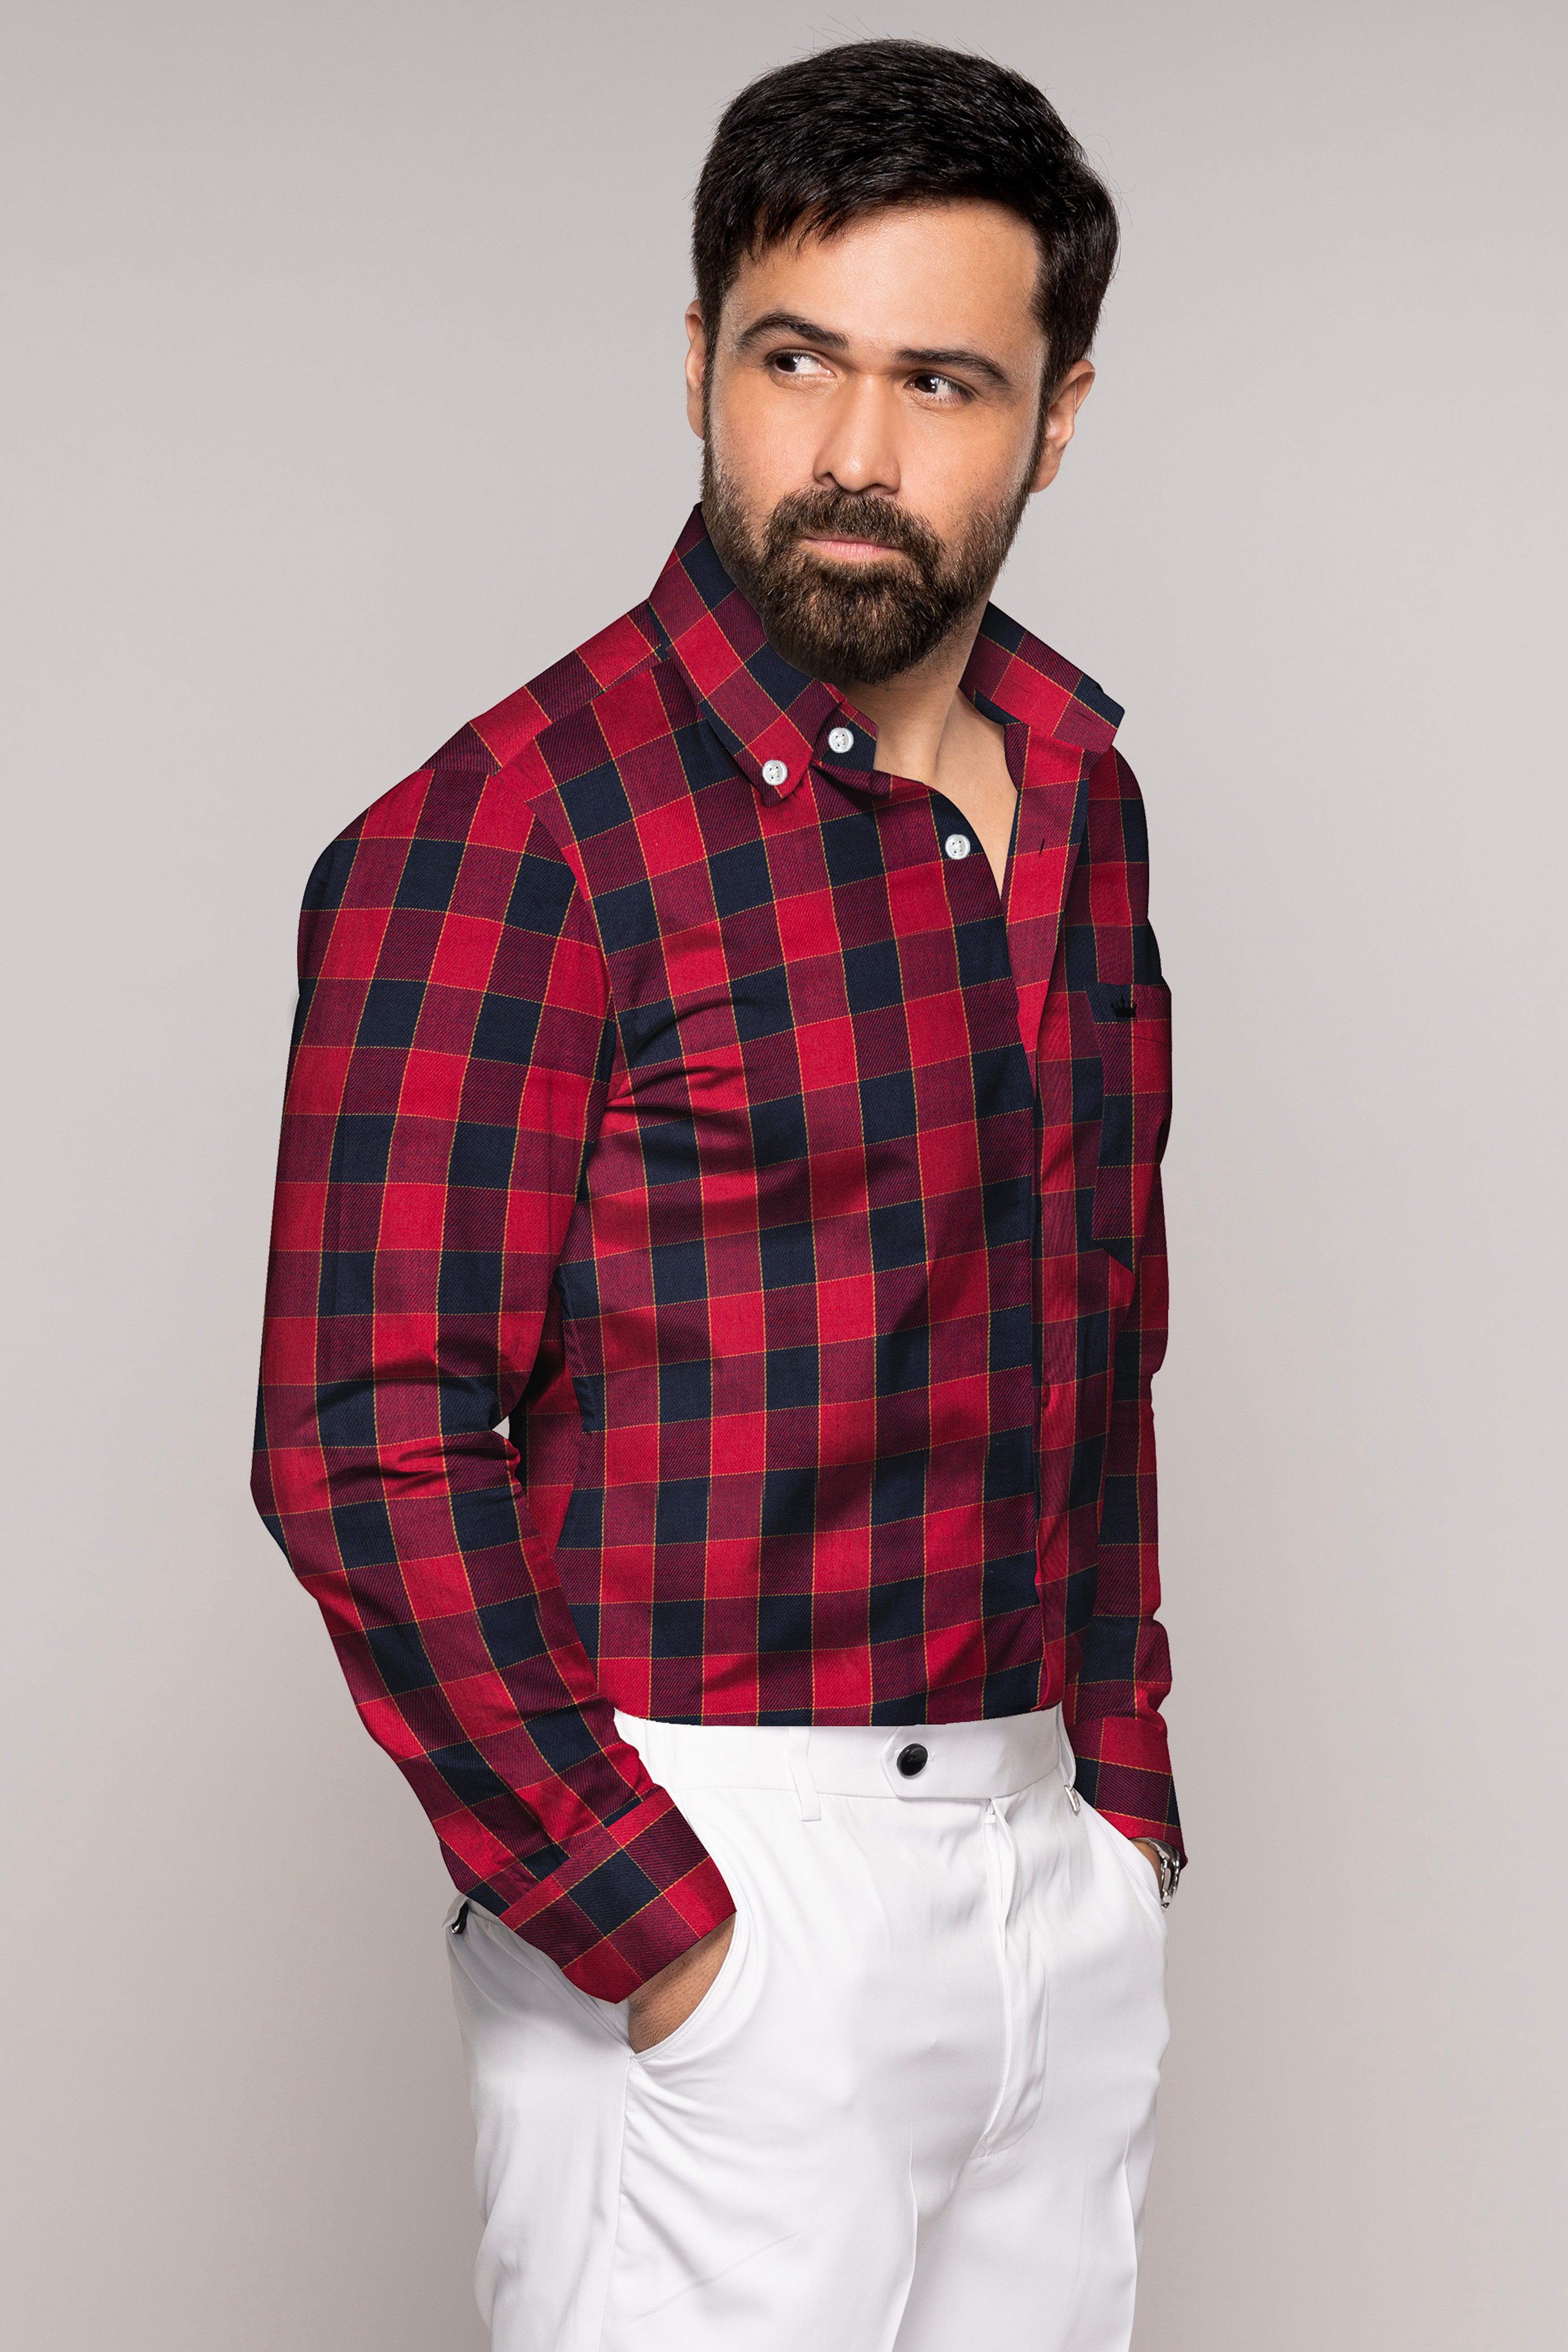 Shiraz Red with Topaz Navy Blue Plaid Twill Premium Cotton Shirt